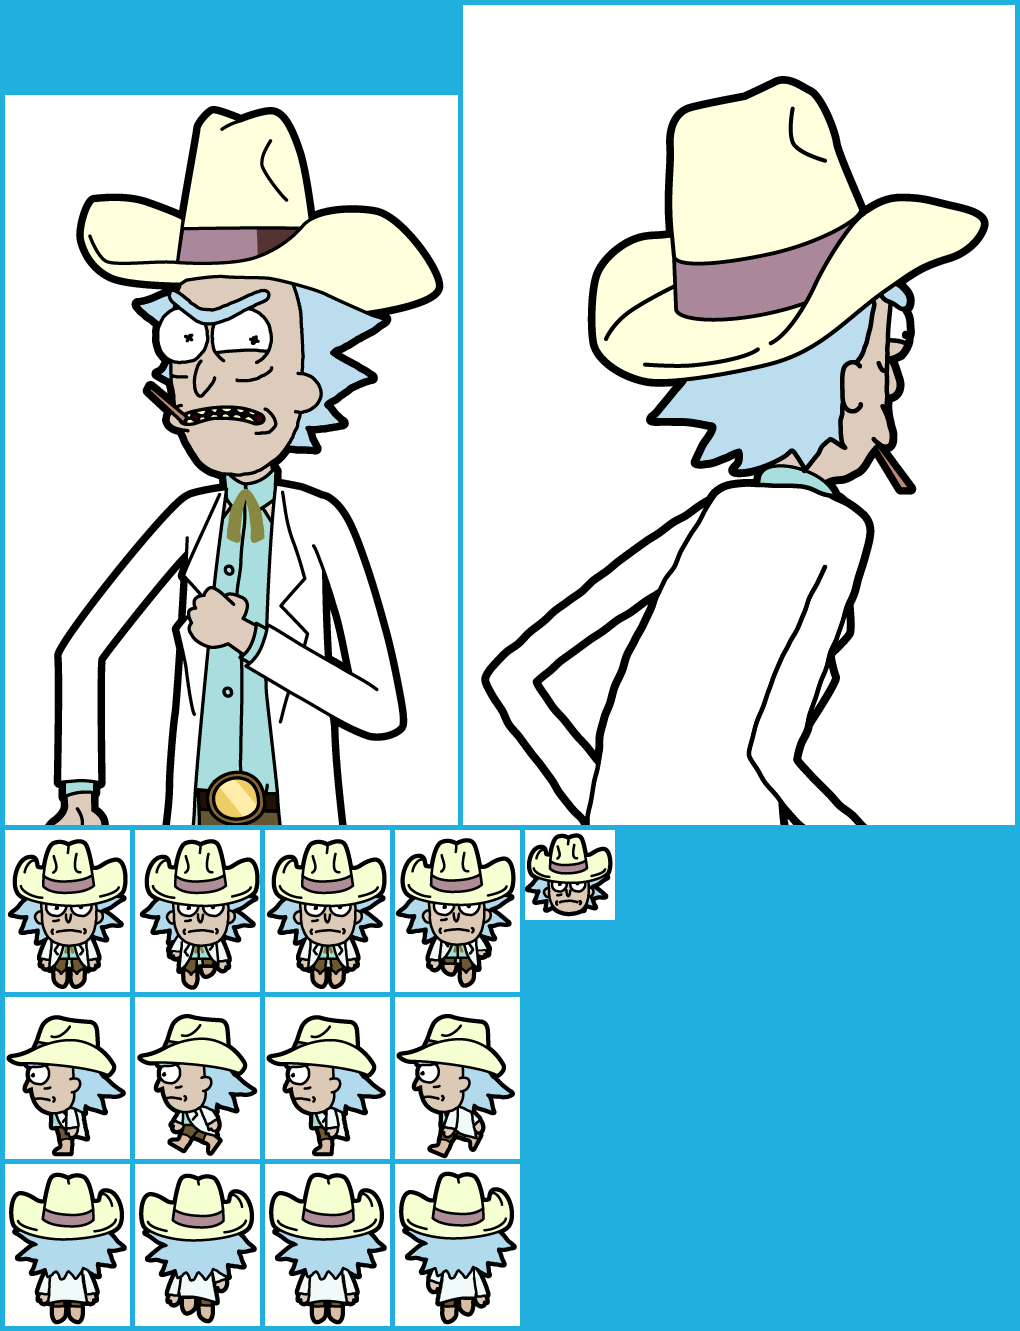 Pocket Mortys - Cowboy Rick